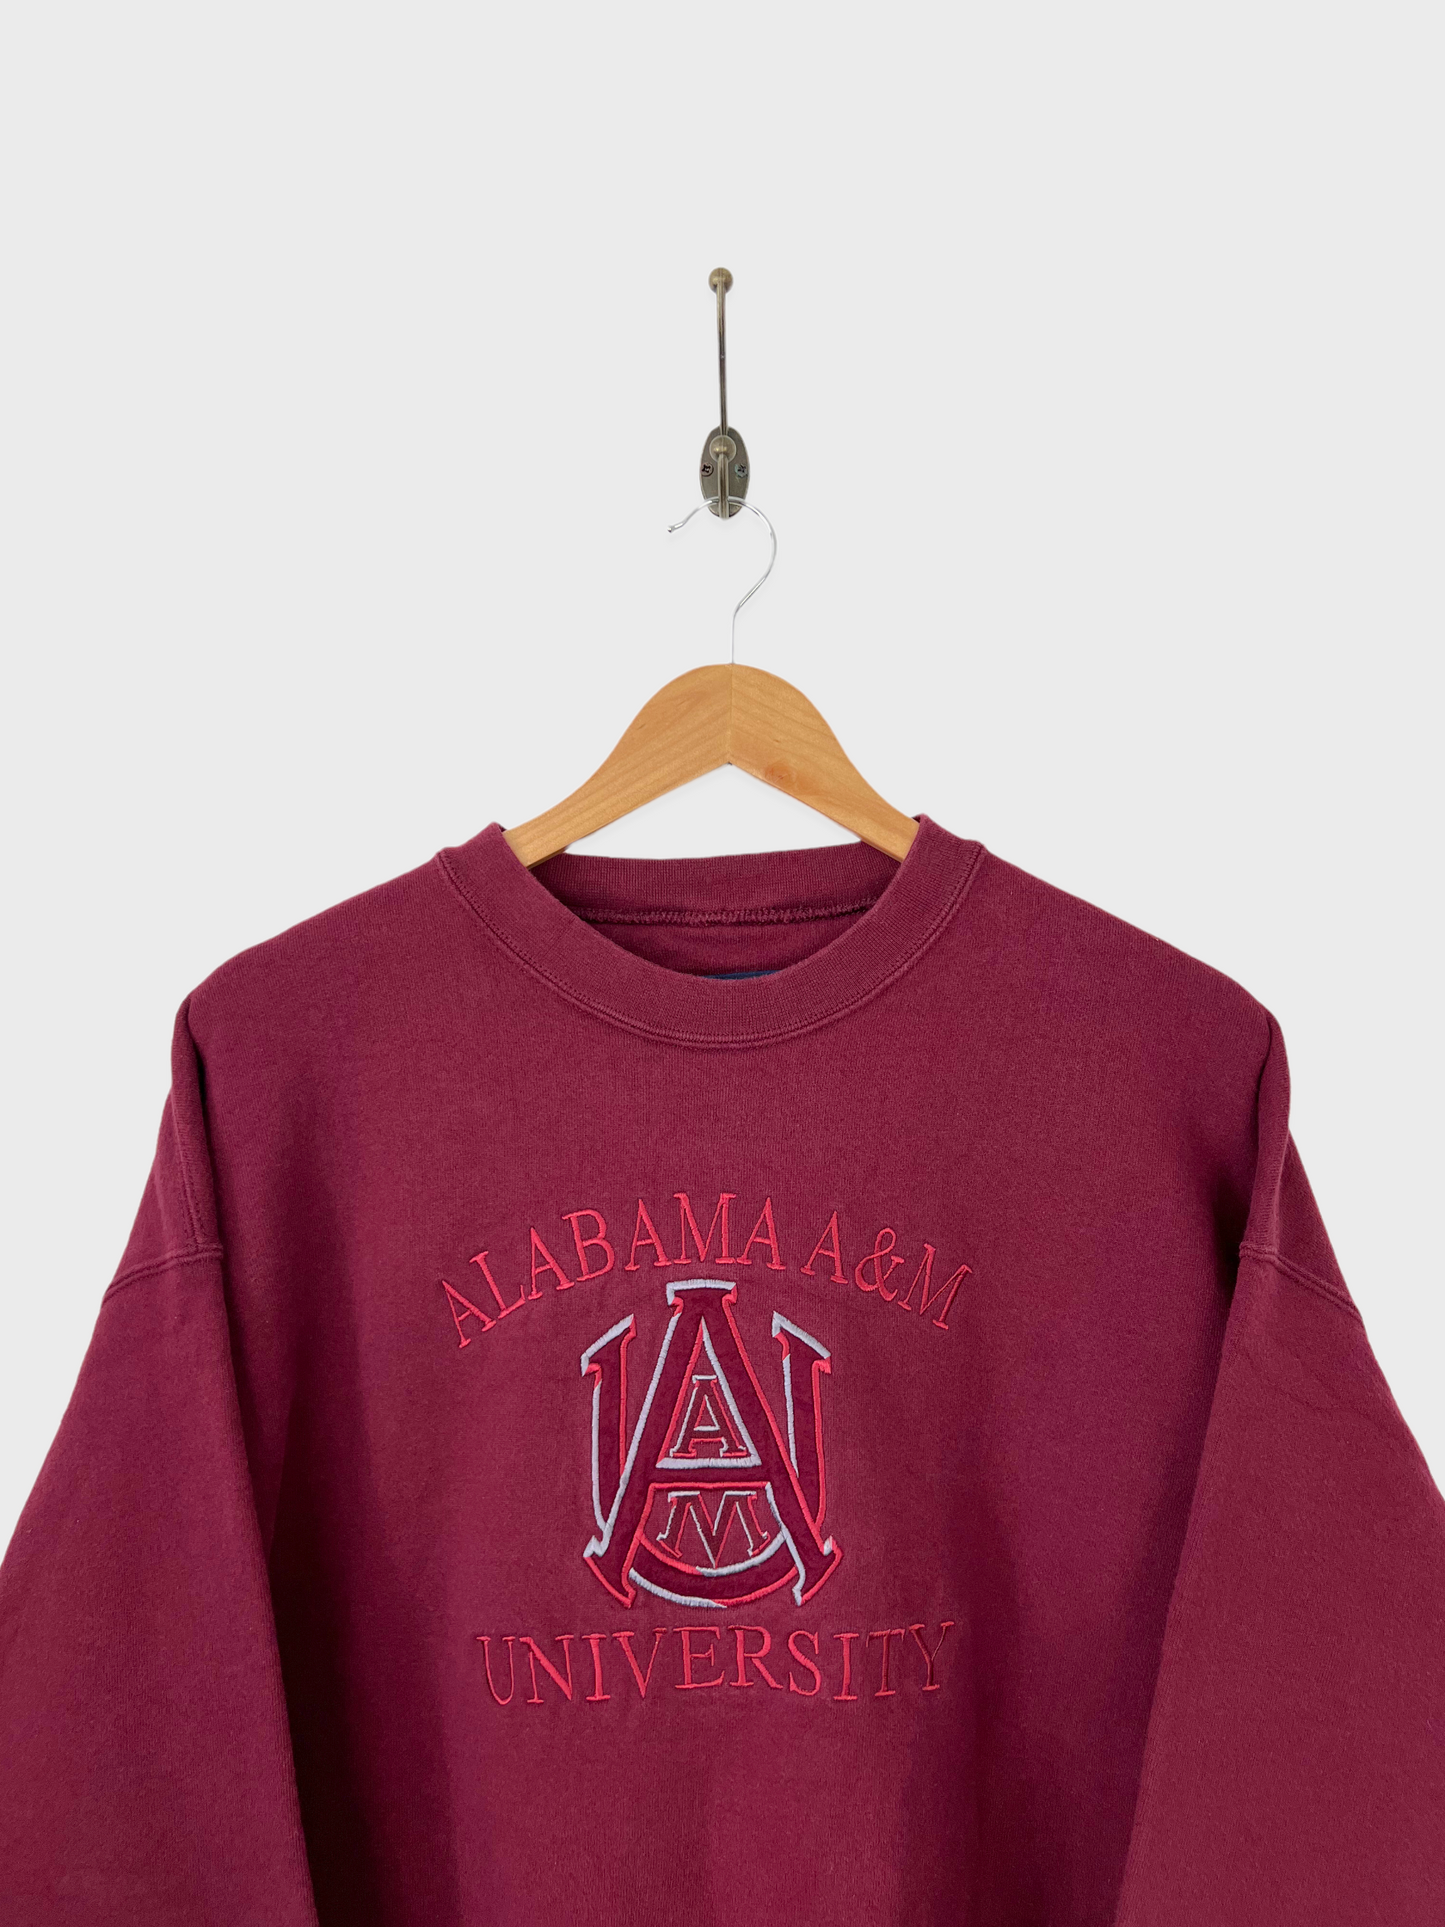 90's Alabama University Embroidered Vintage Sweatshirt Size M-L